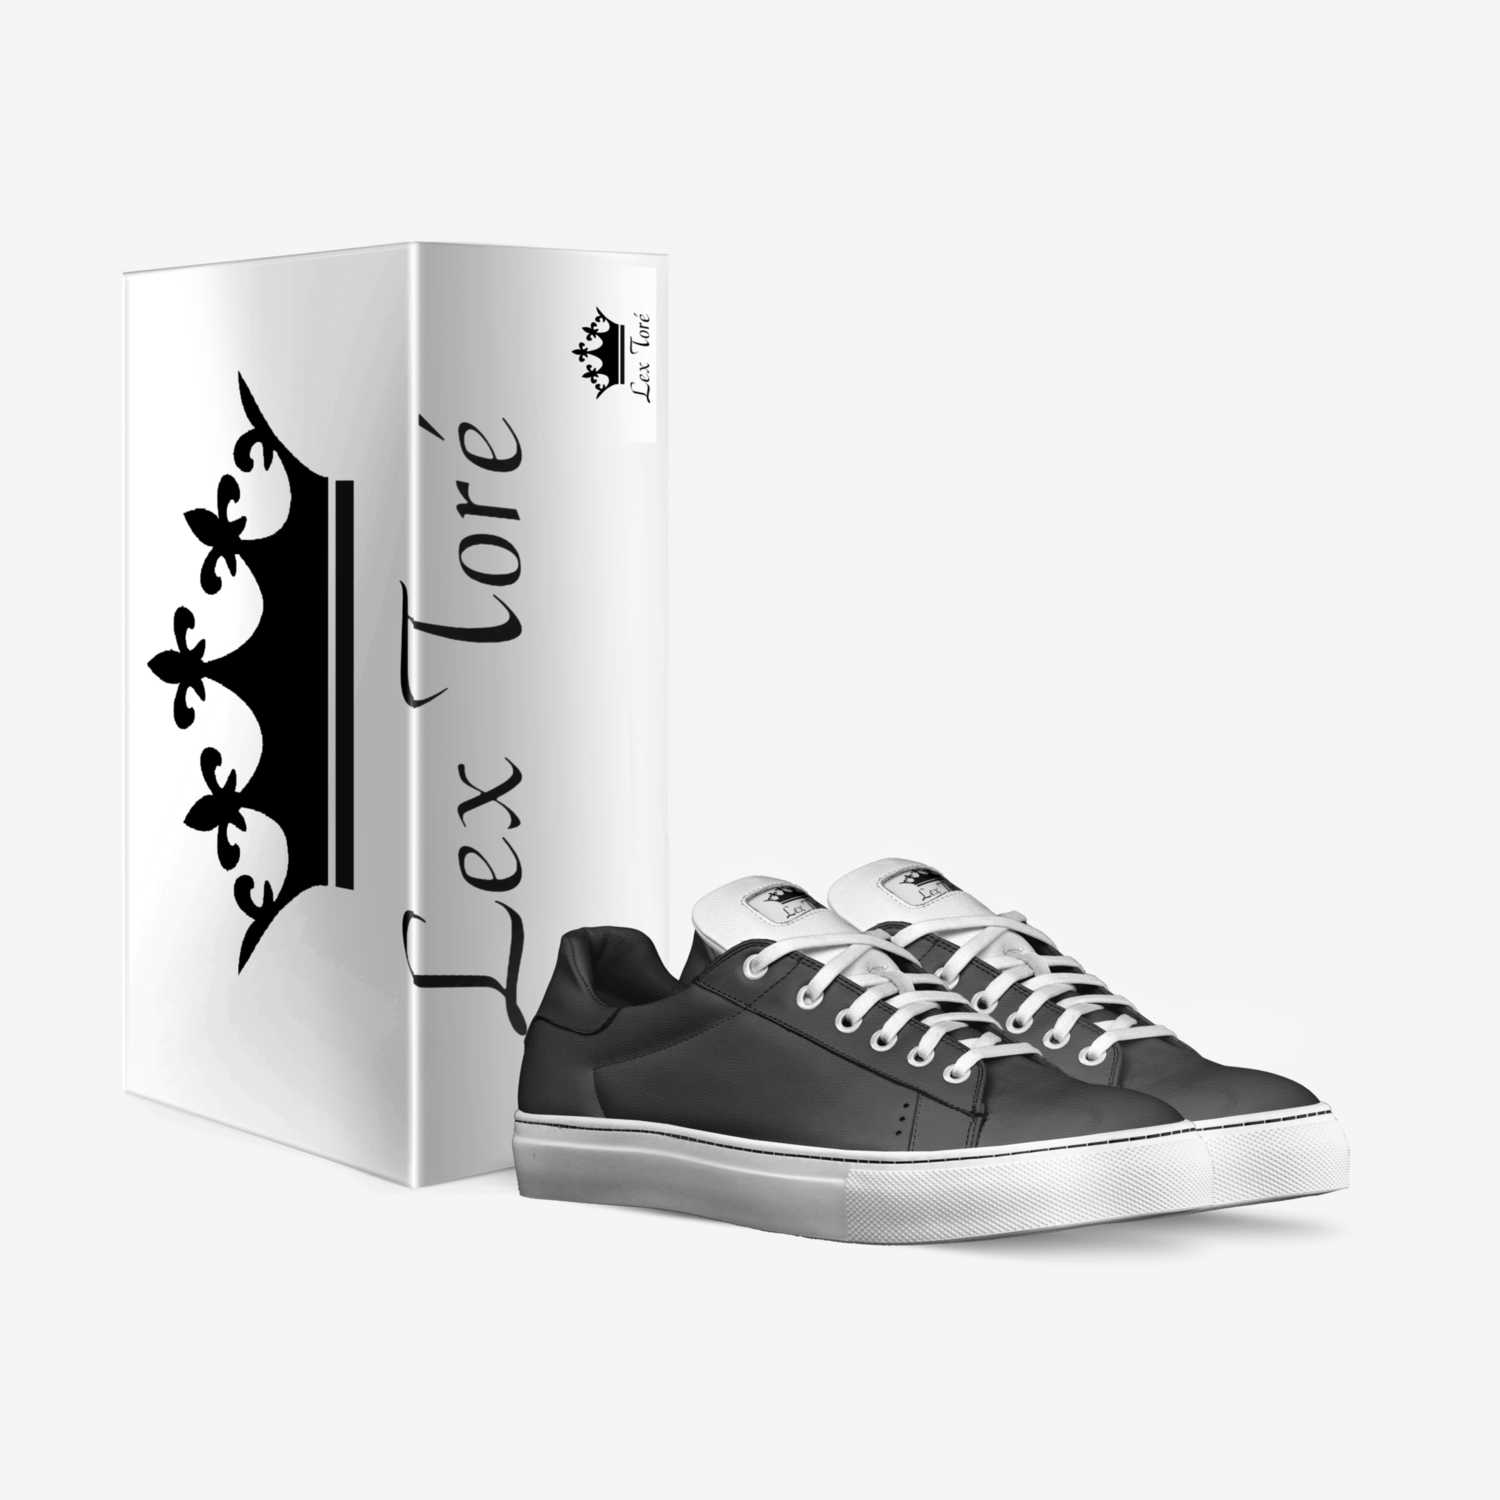 Lex Toré custom made in Italy shoes by Lex Toré | Box view